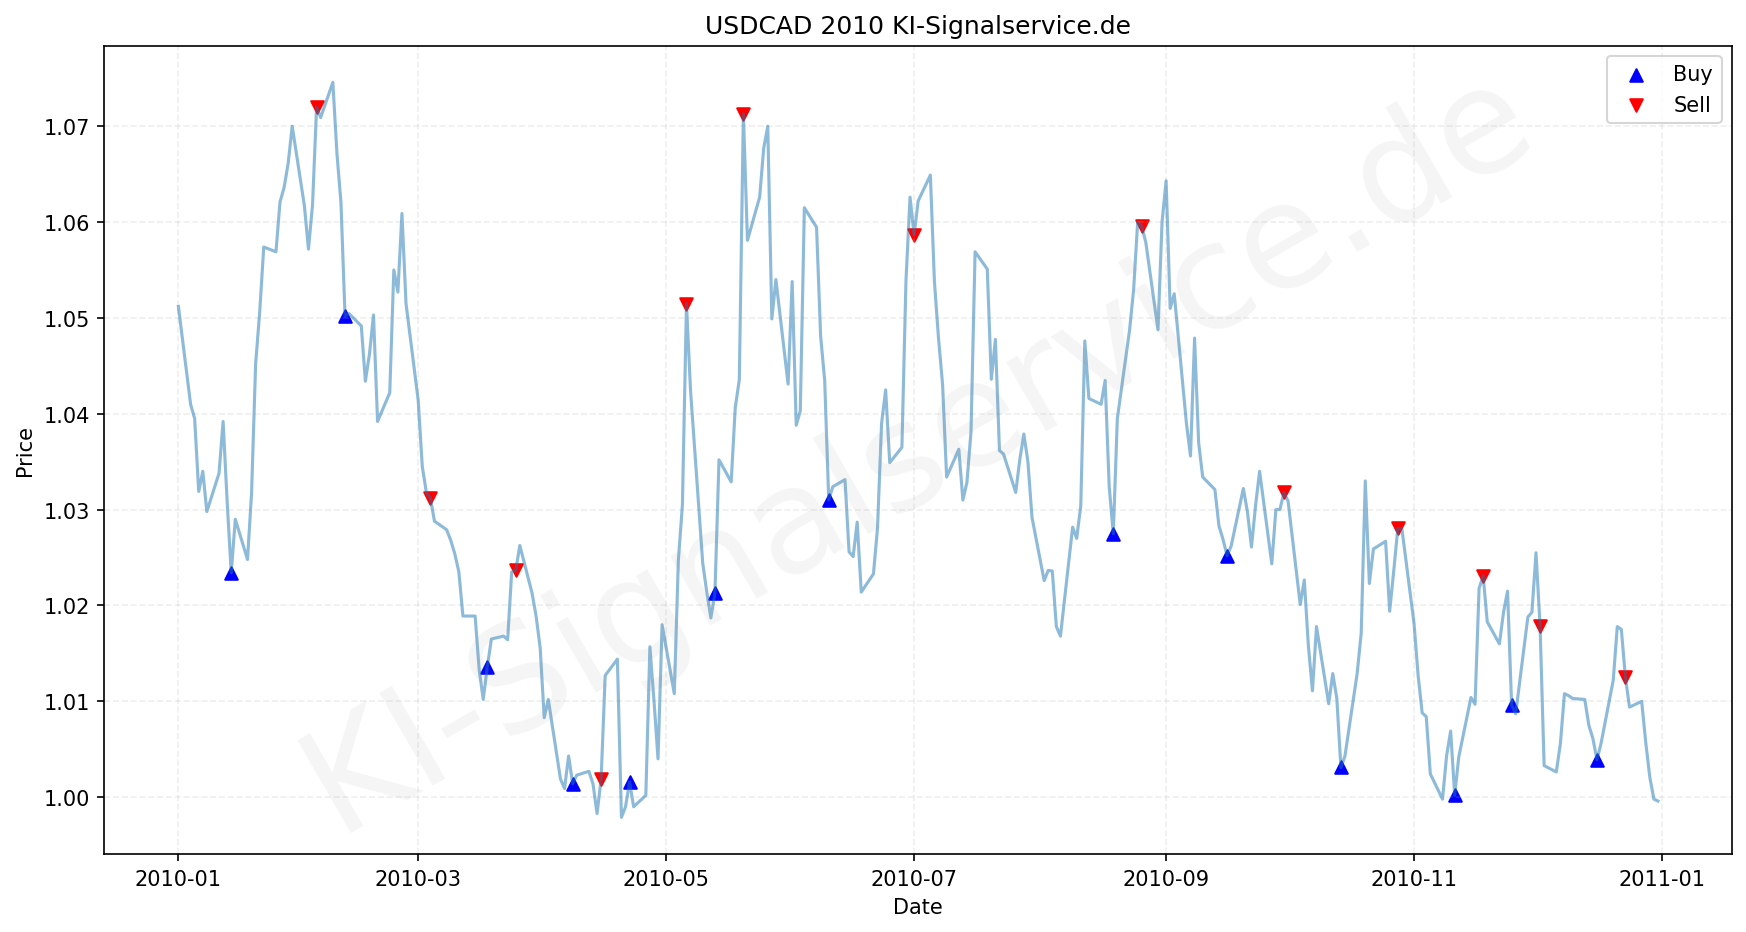 USDCAD Chart - KI Tradingsignale 2010